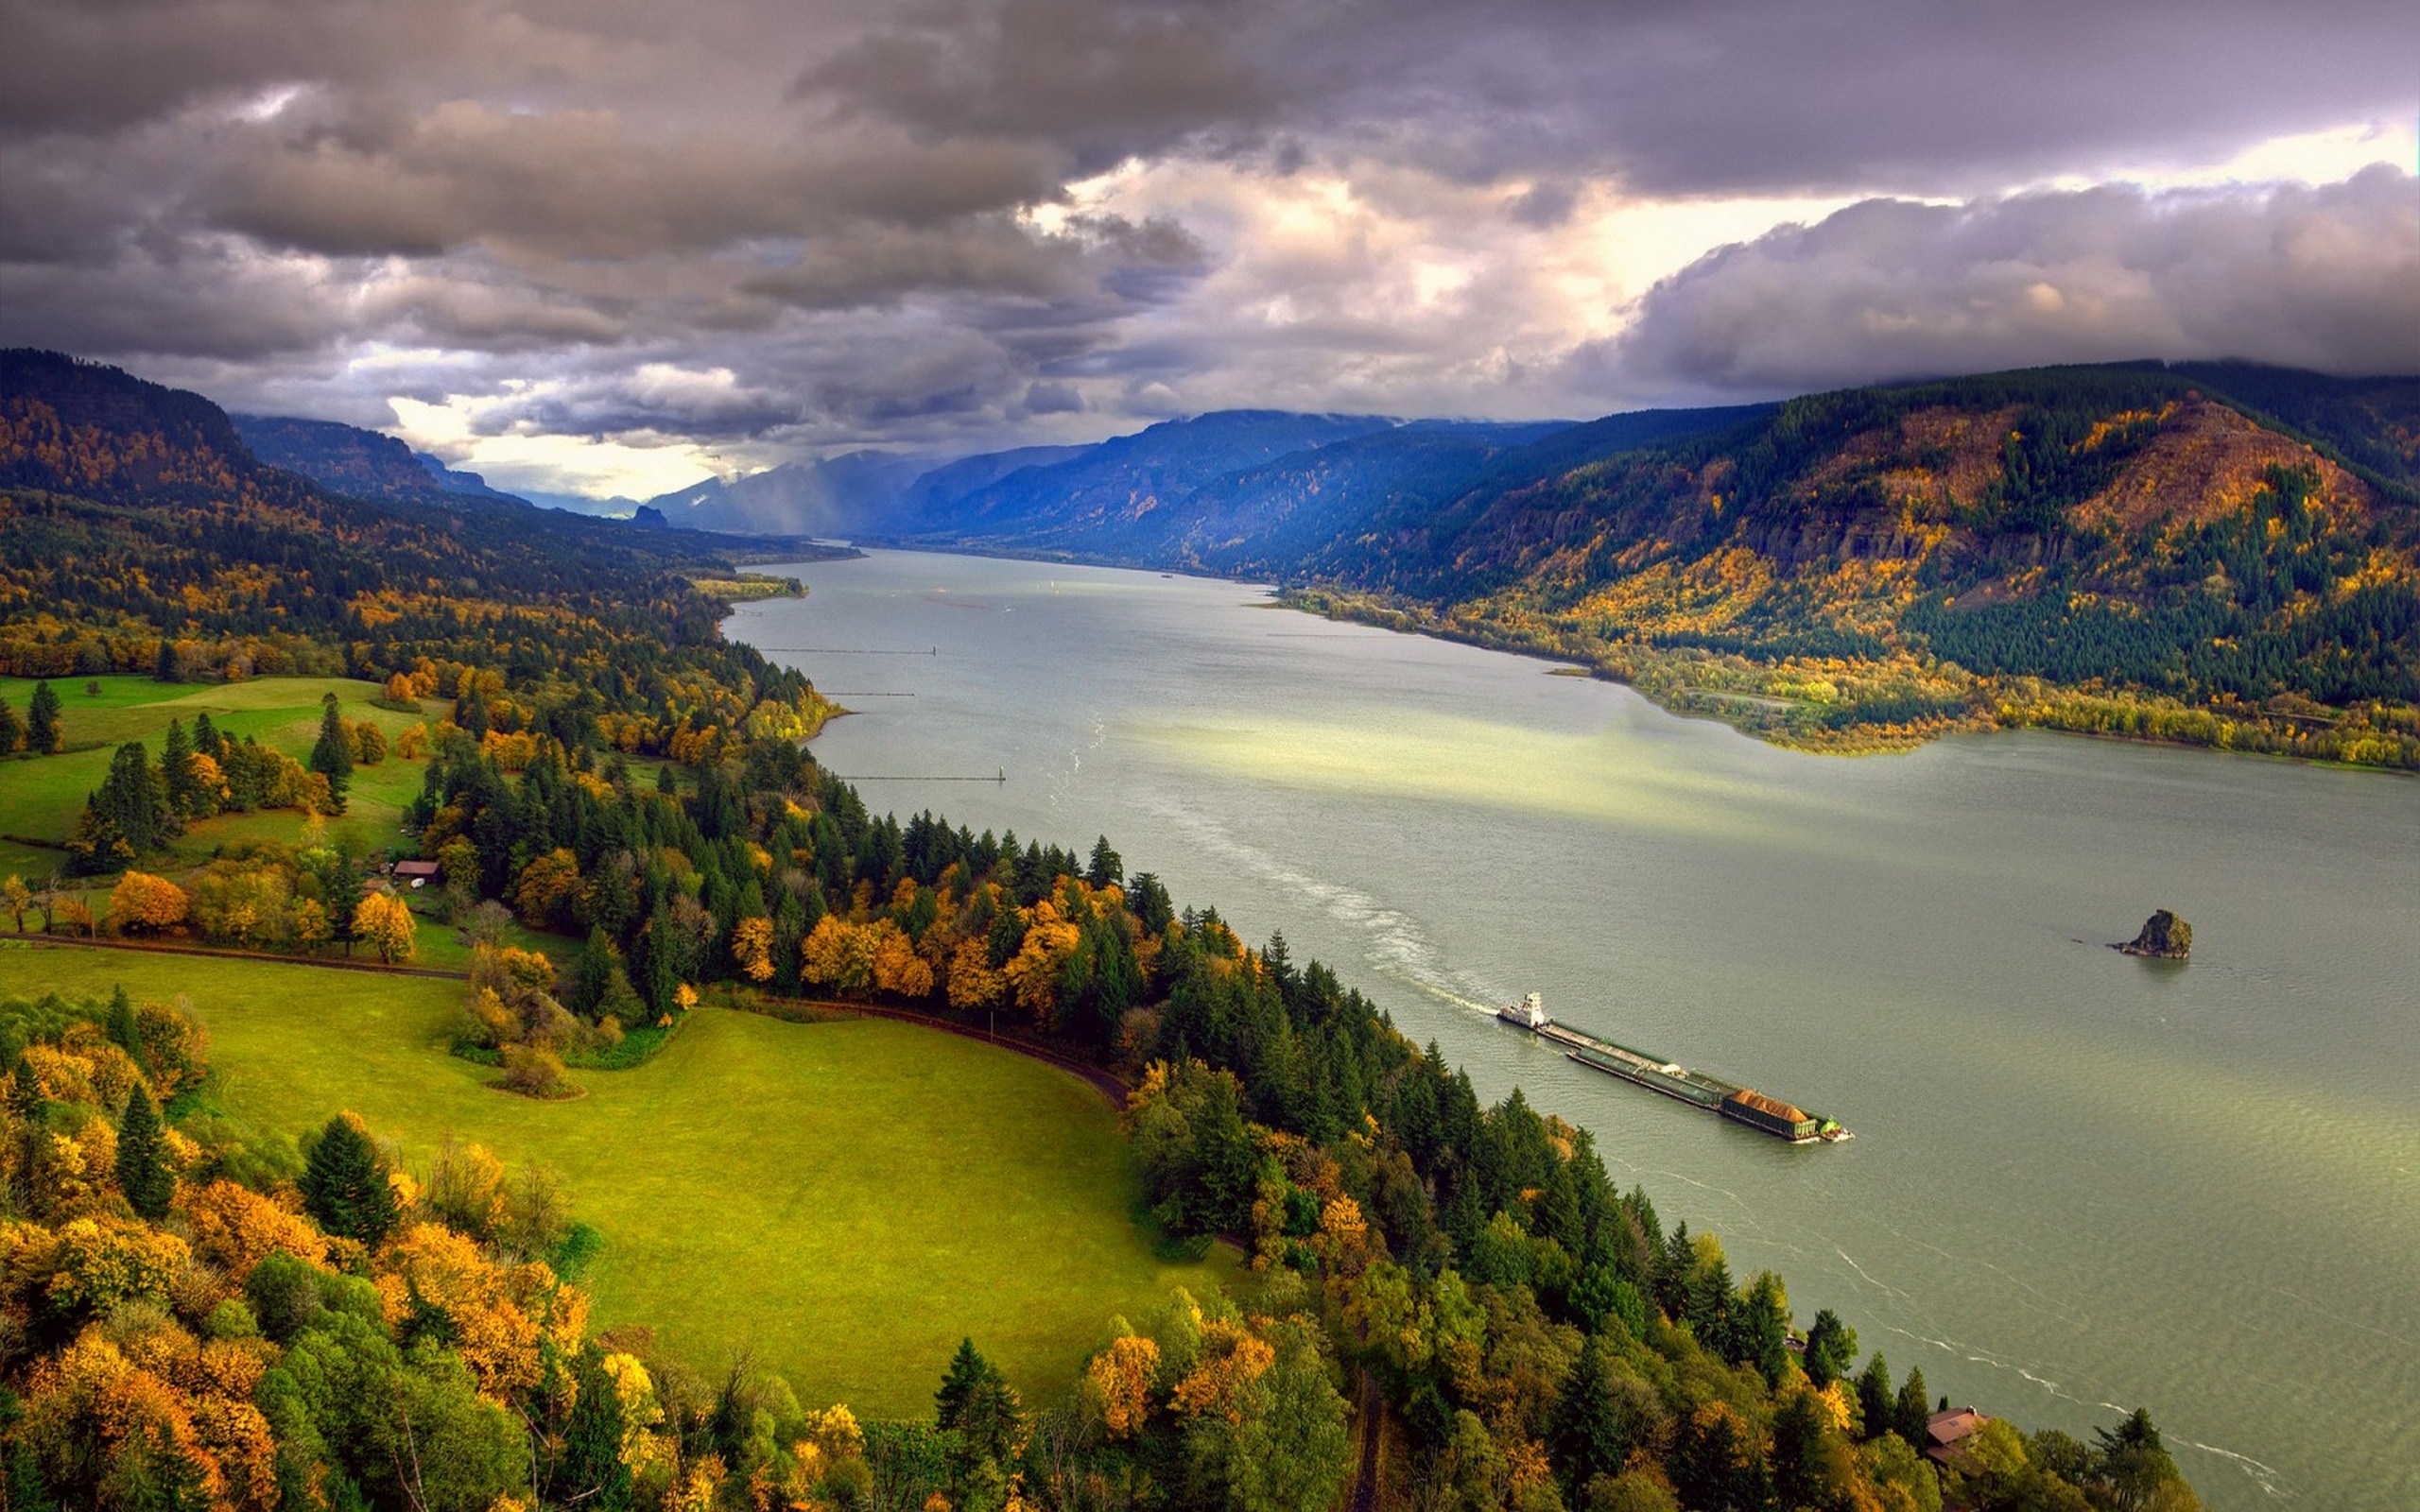 Columbia River Gorge - HD Wallpaper 